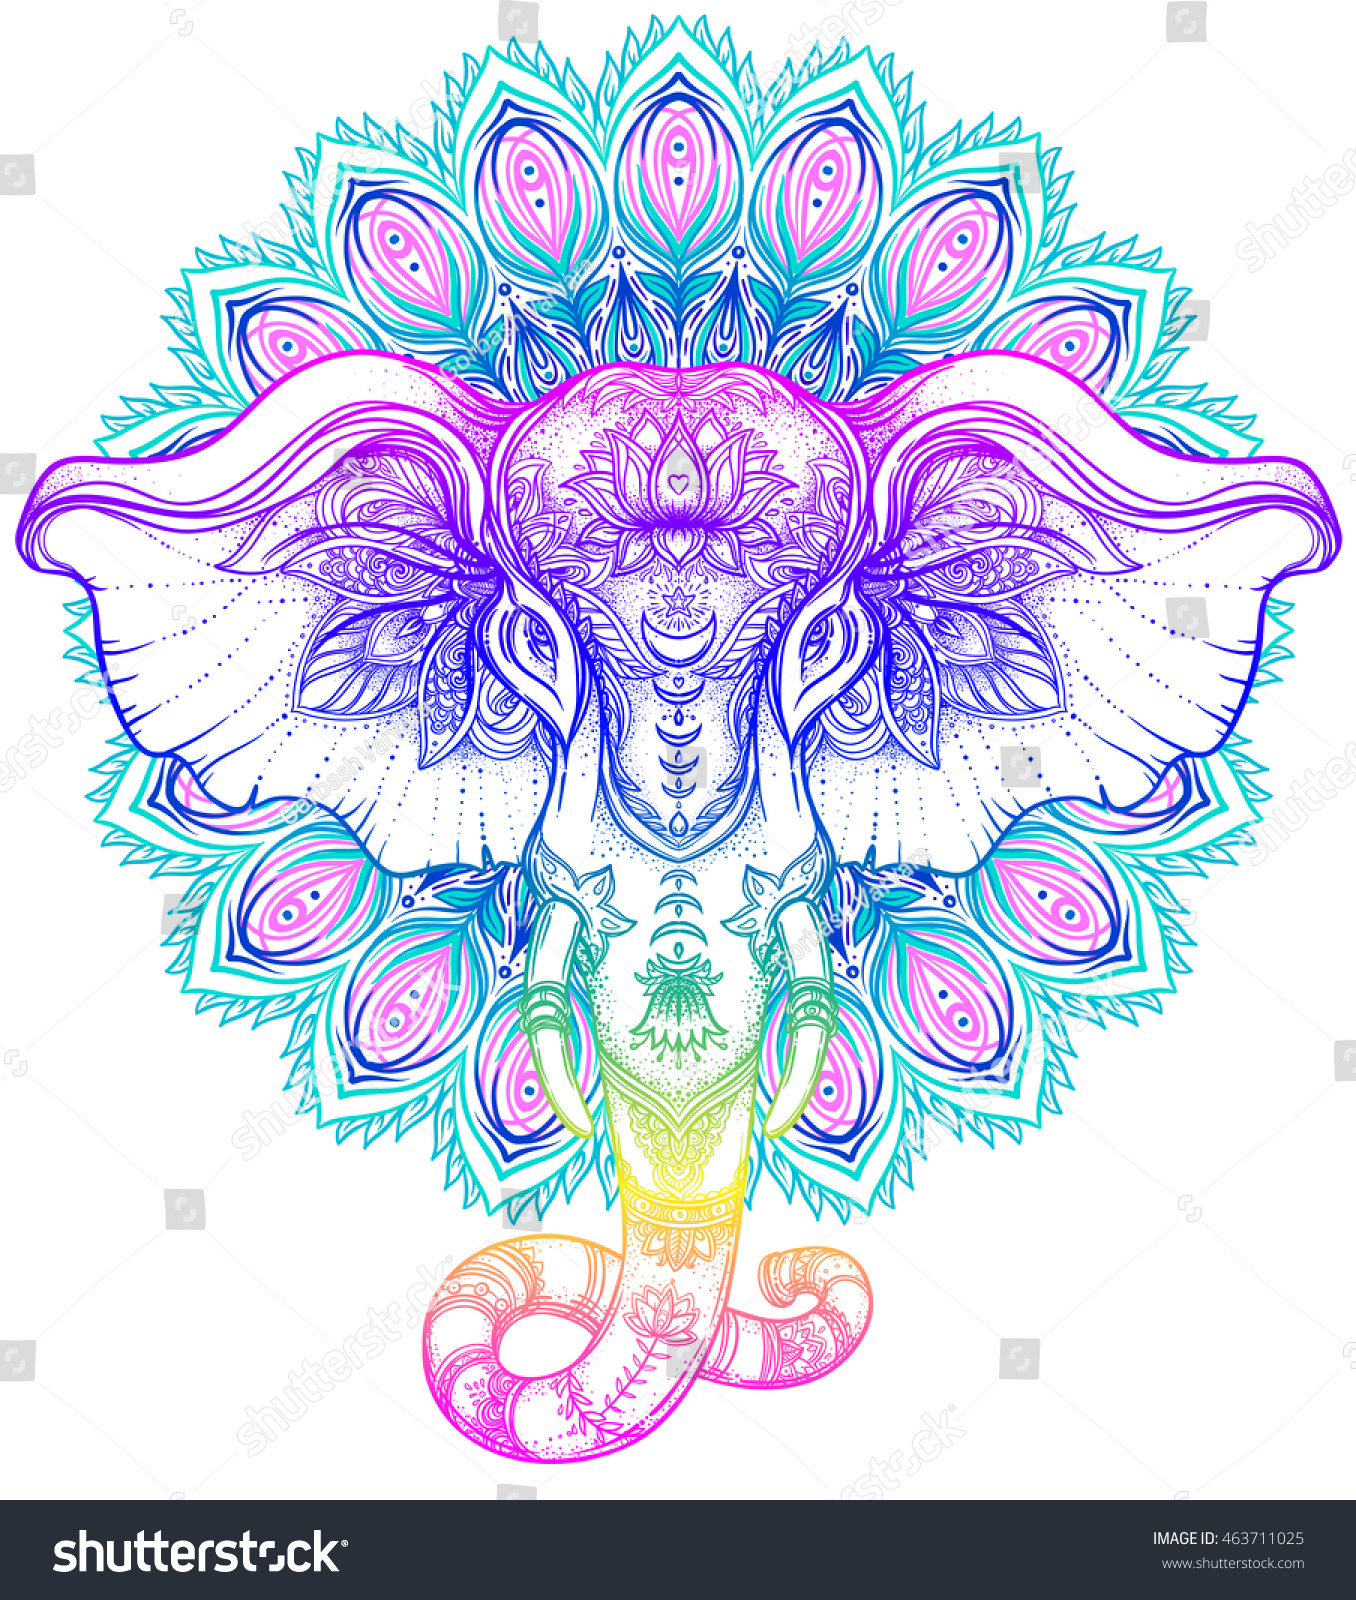 SVG of Beautiful hand-drawn tribal style elephant over mandala. Colorful design with boho pattern, psychedelic ornaments. Ethnic poster, spiritual art, yoga. Indian god Ganesha, Indian symbol. T-shirt print. svg